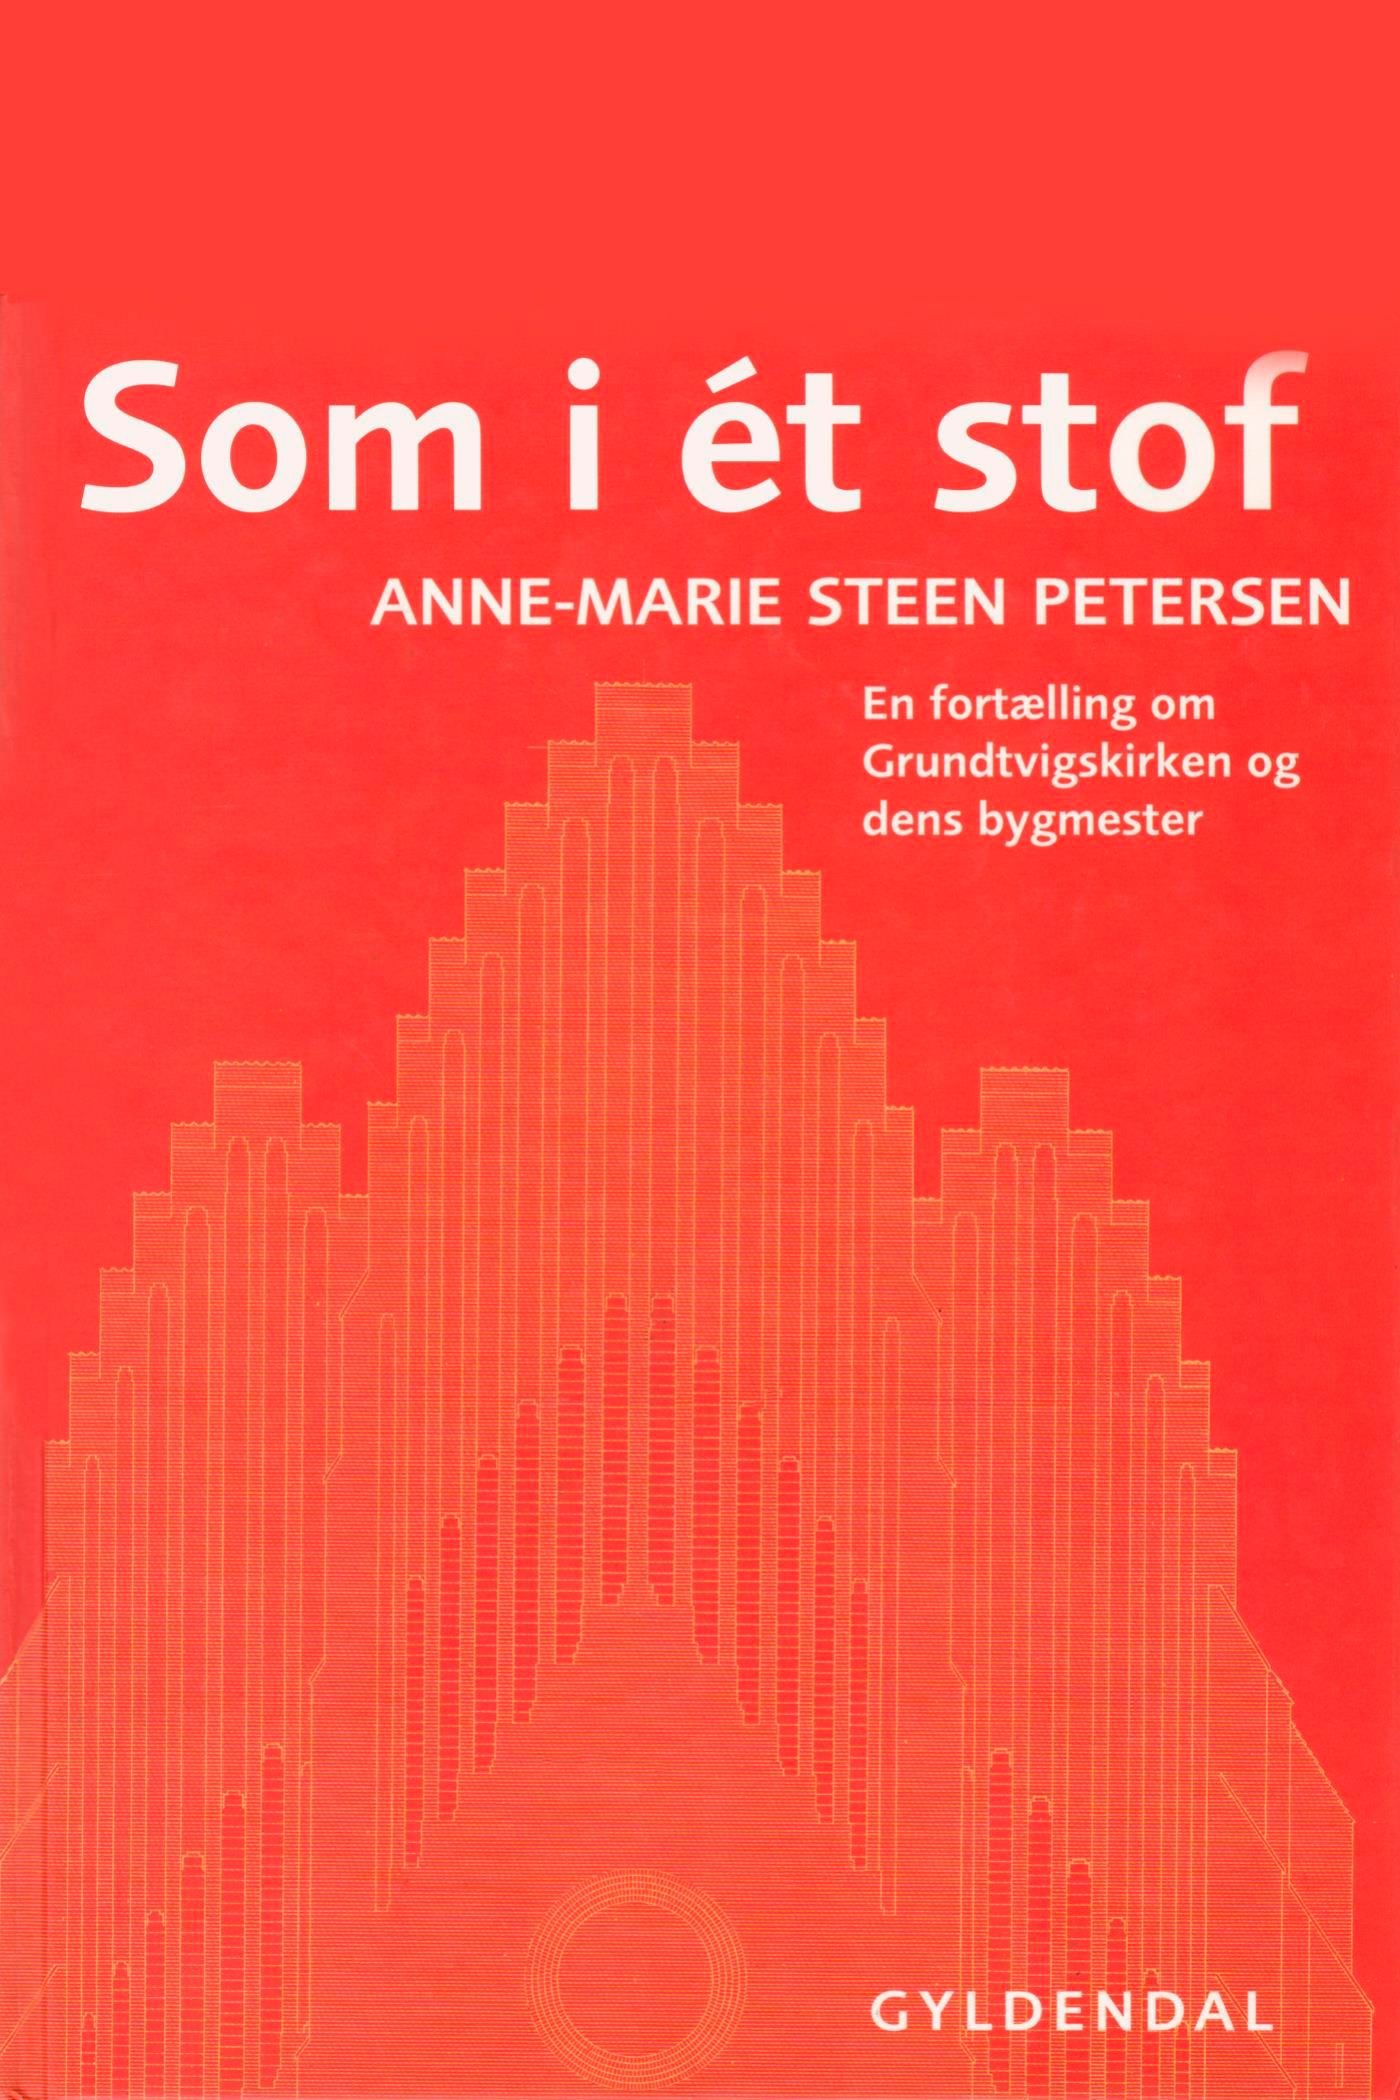 Som i ét stof, eBook by Anne-Marie Steen Petersen